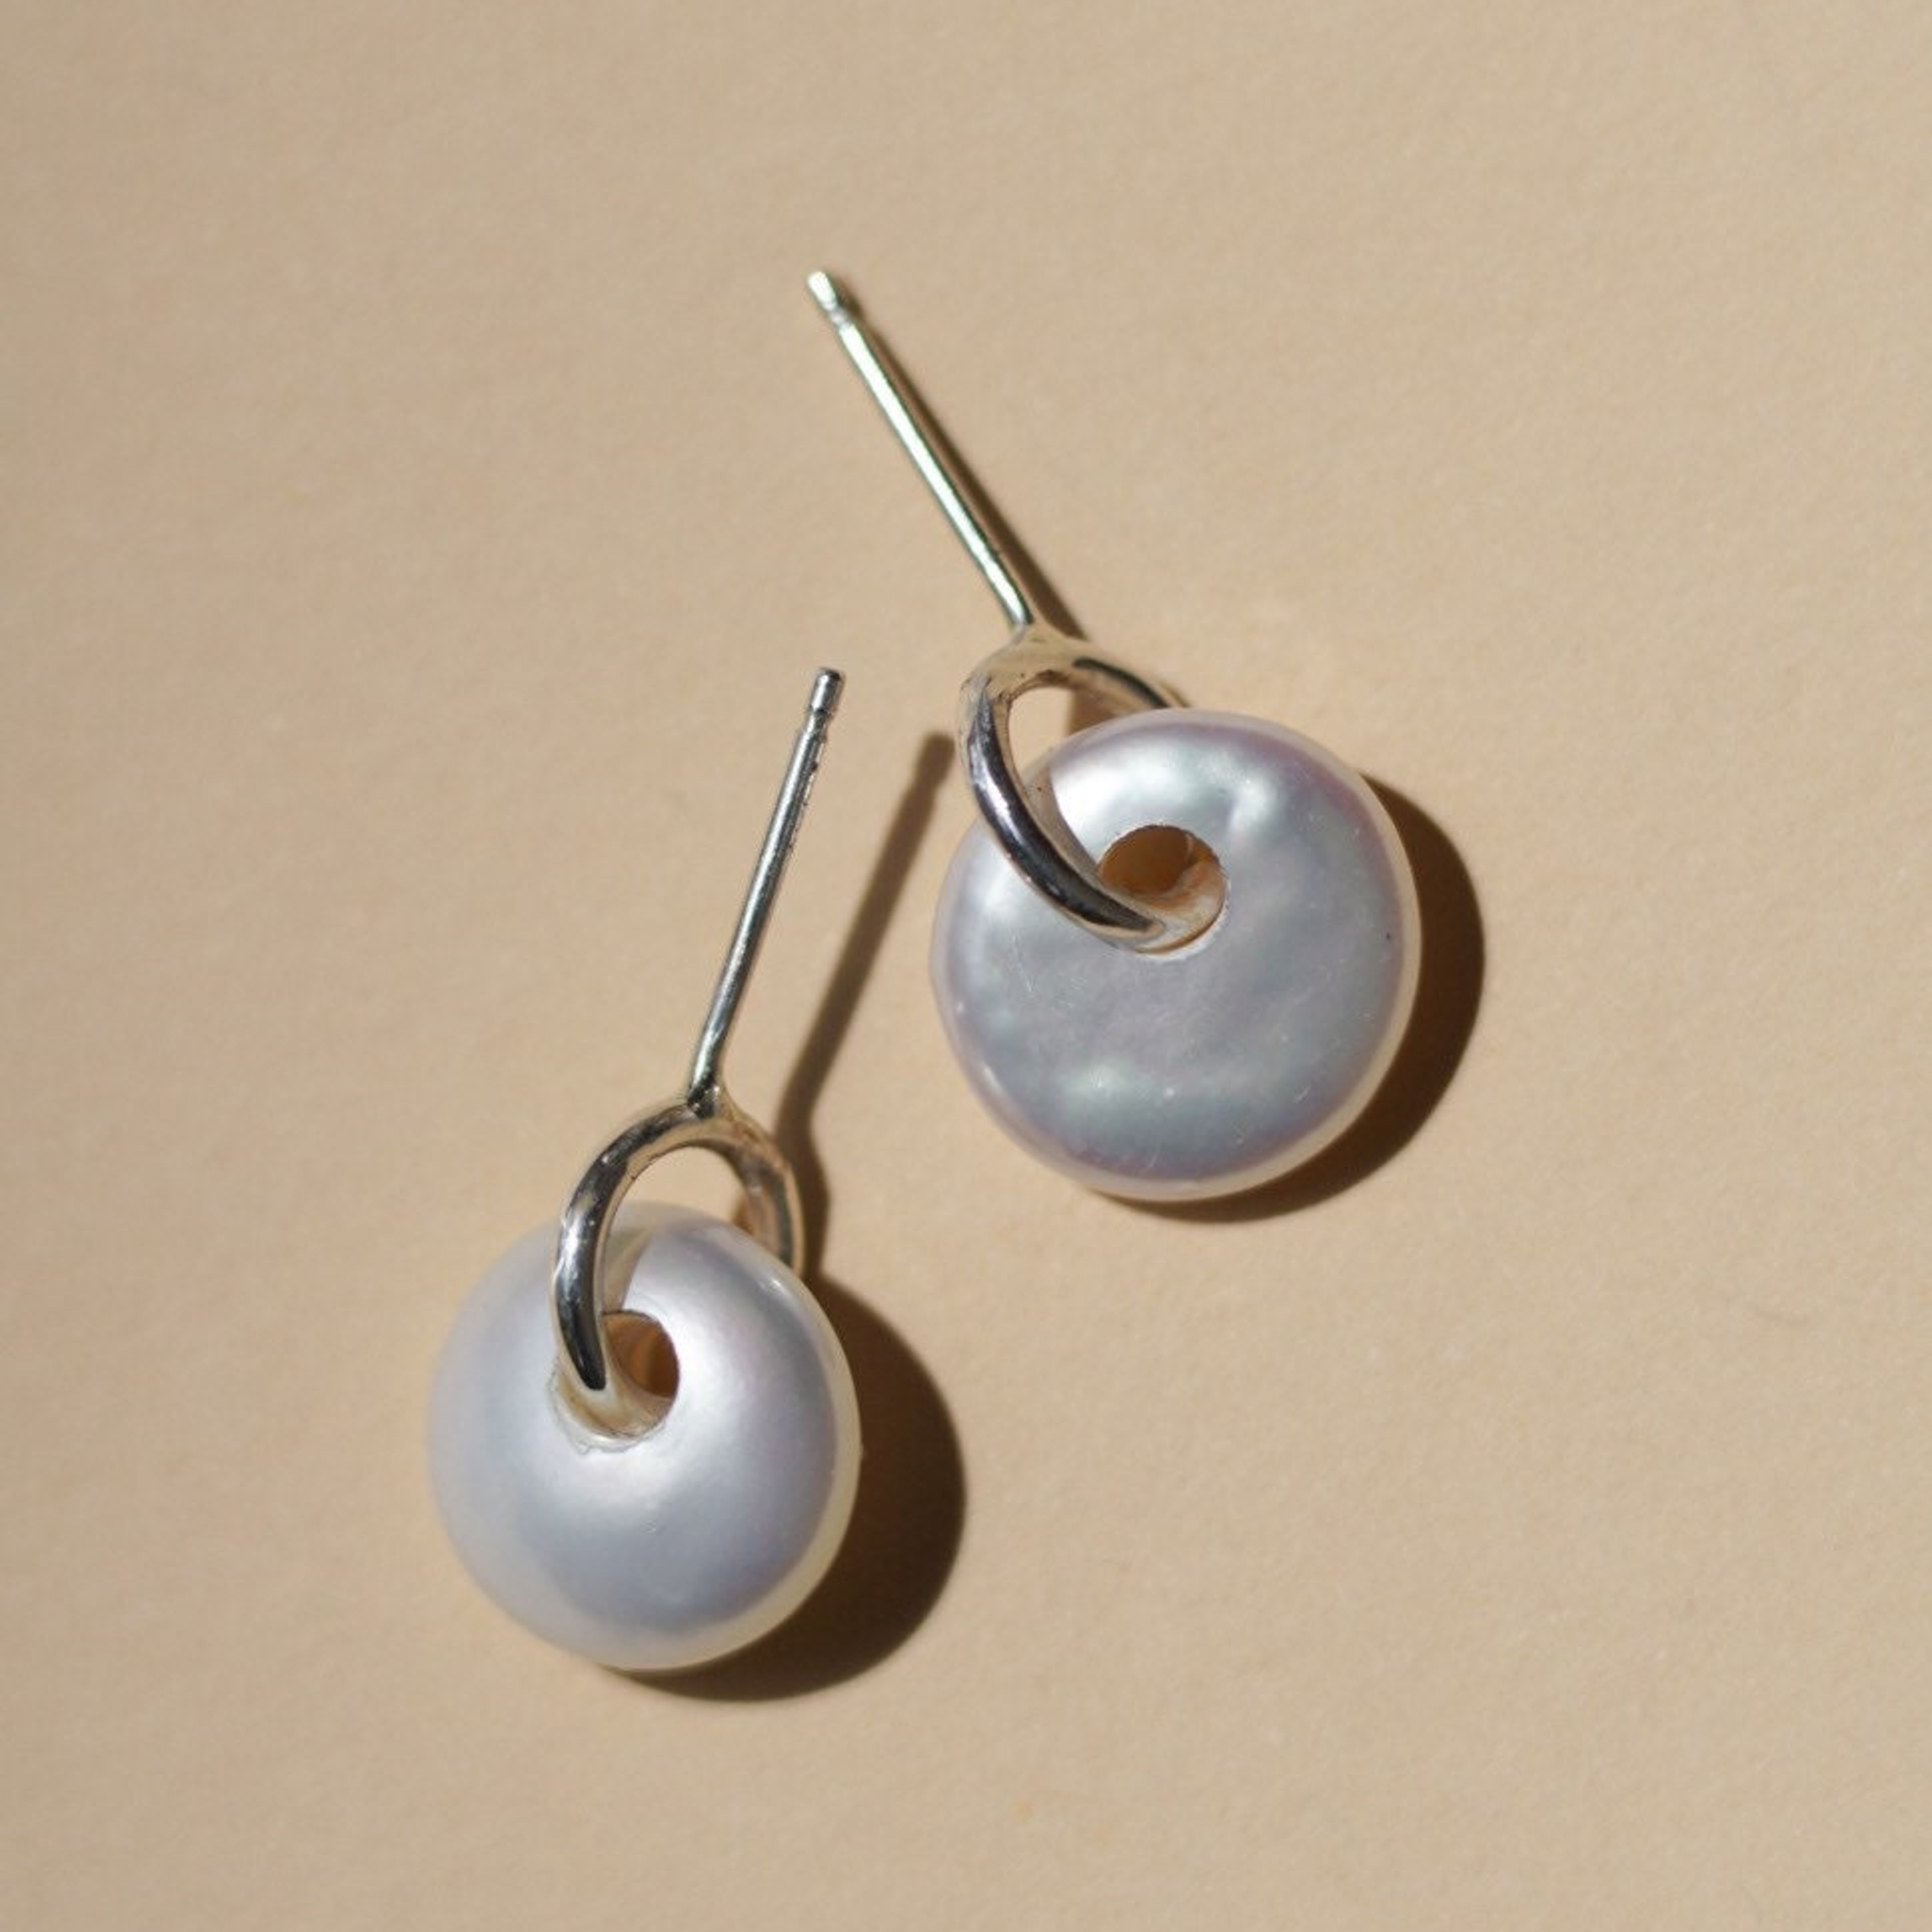 Pearl Dainty Stud Earrings